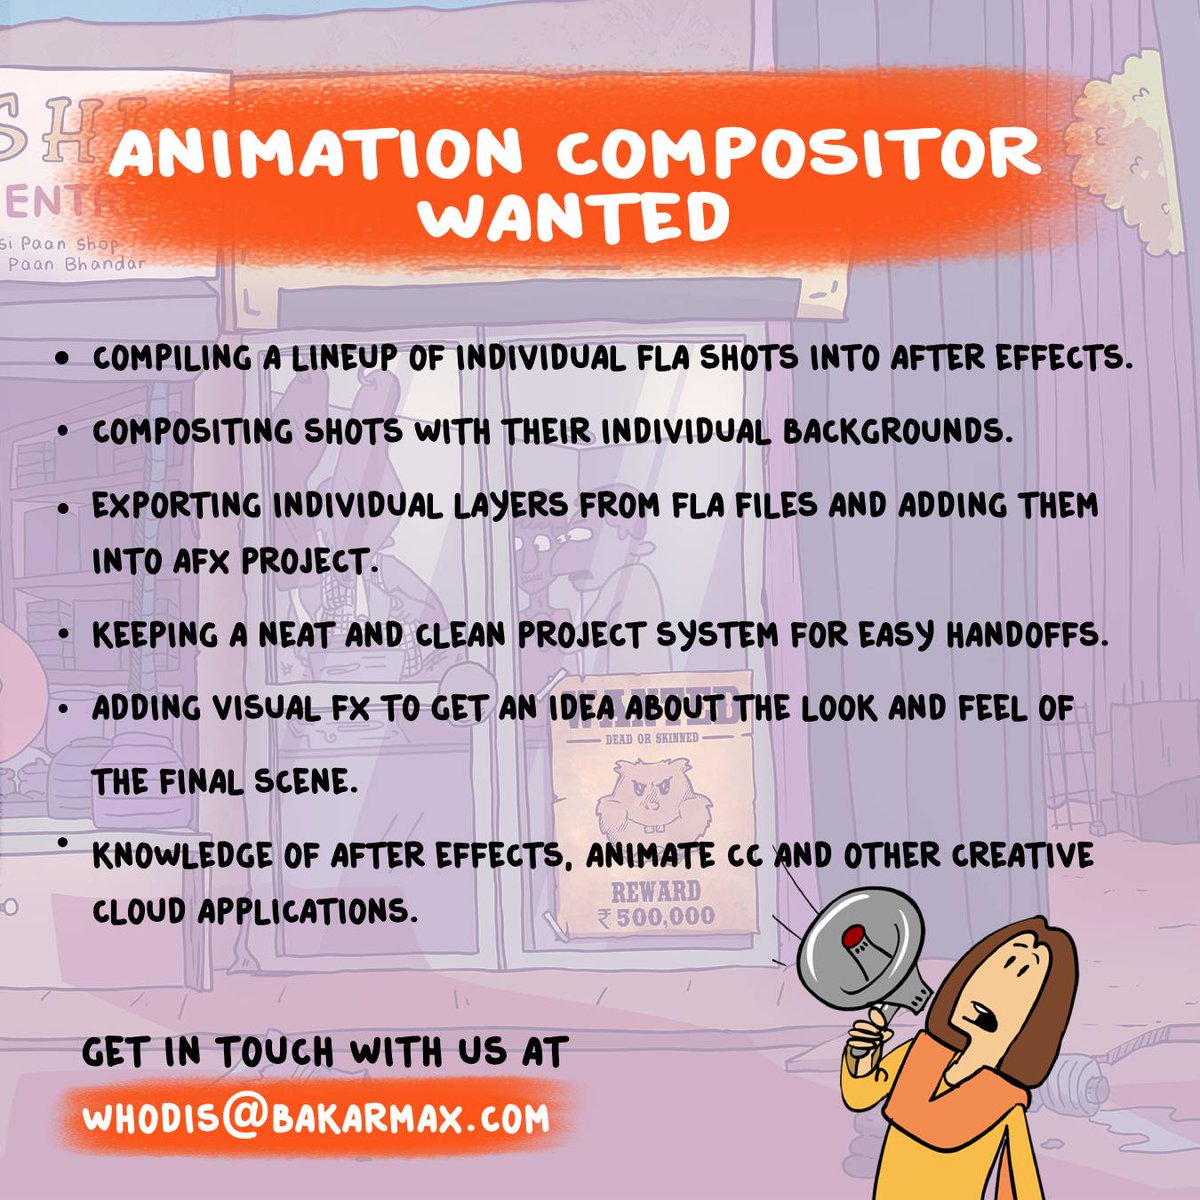 ALERT! 📢 ALERT! 📢

Be a part of Aaapki Poojita Team

#hiring  #Hiringcompositor #compositor #HIRINGNOW  #animationjobs